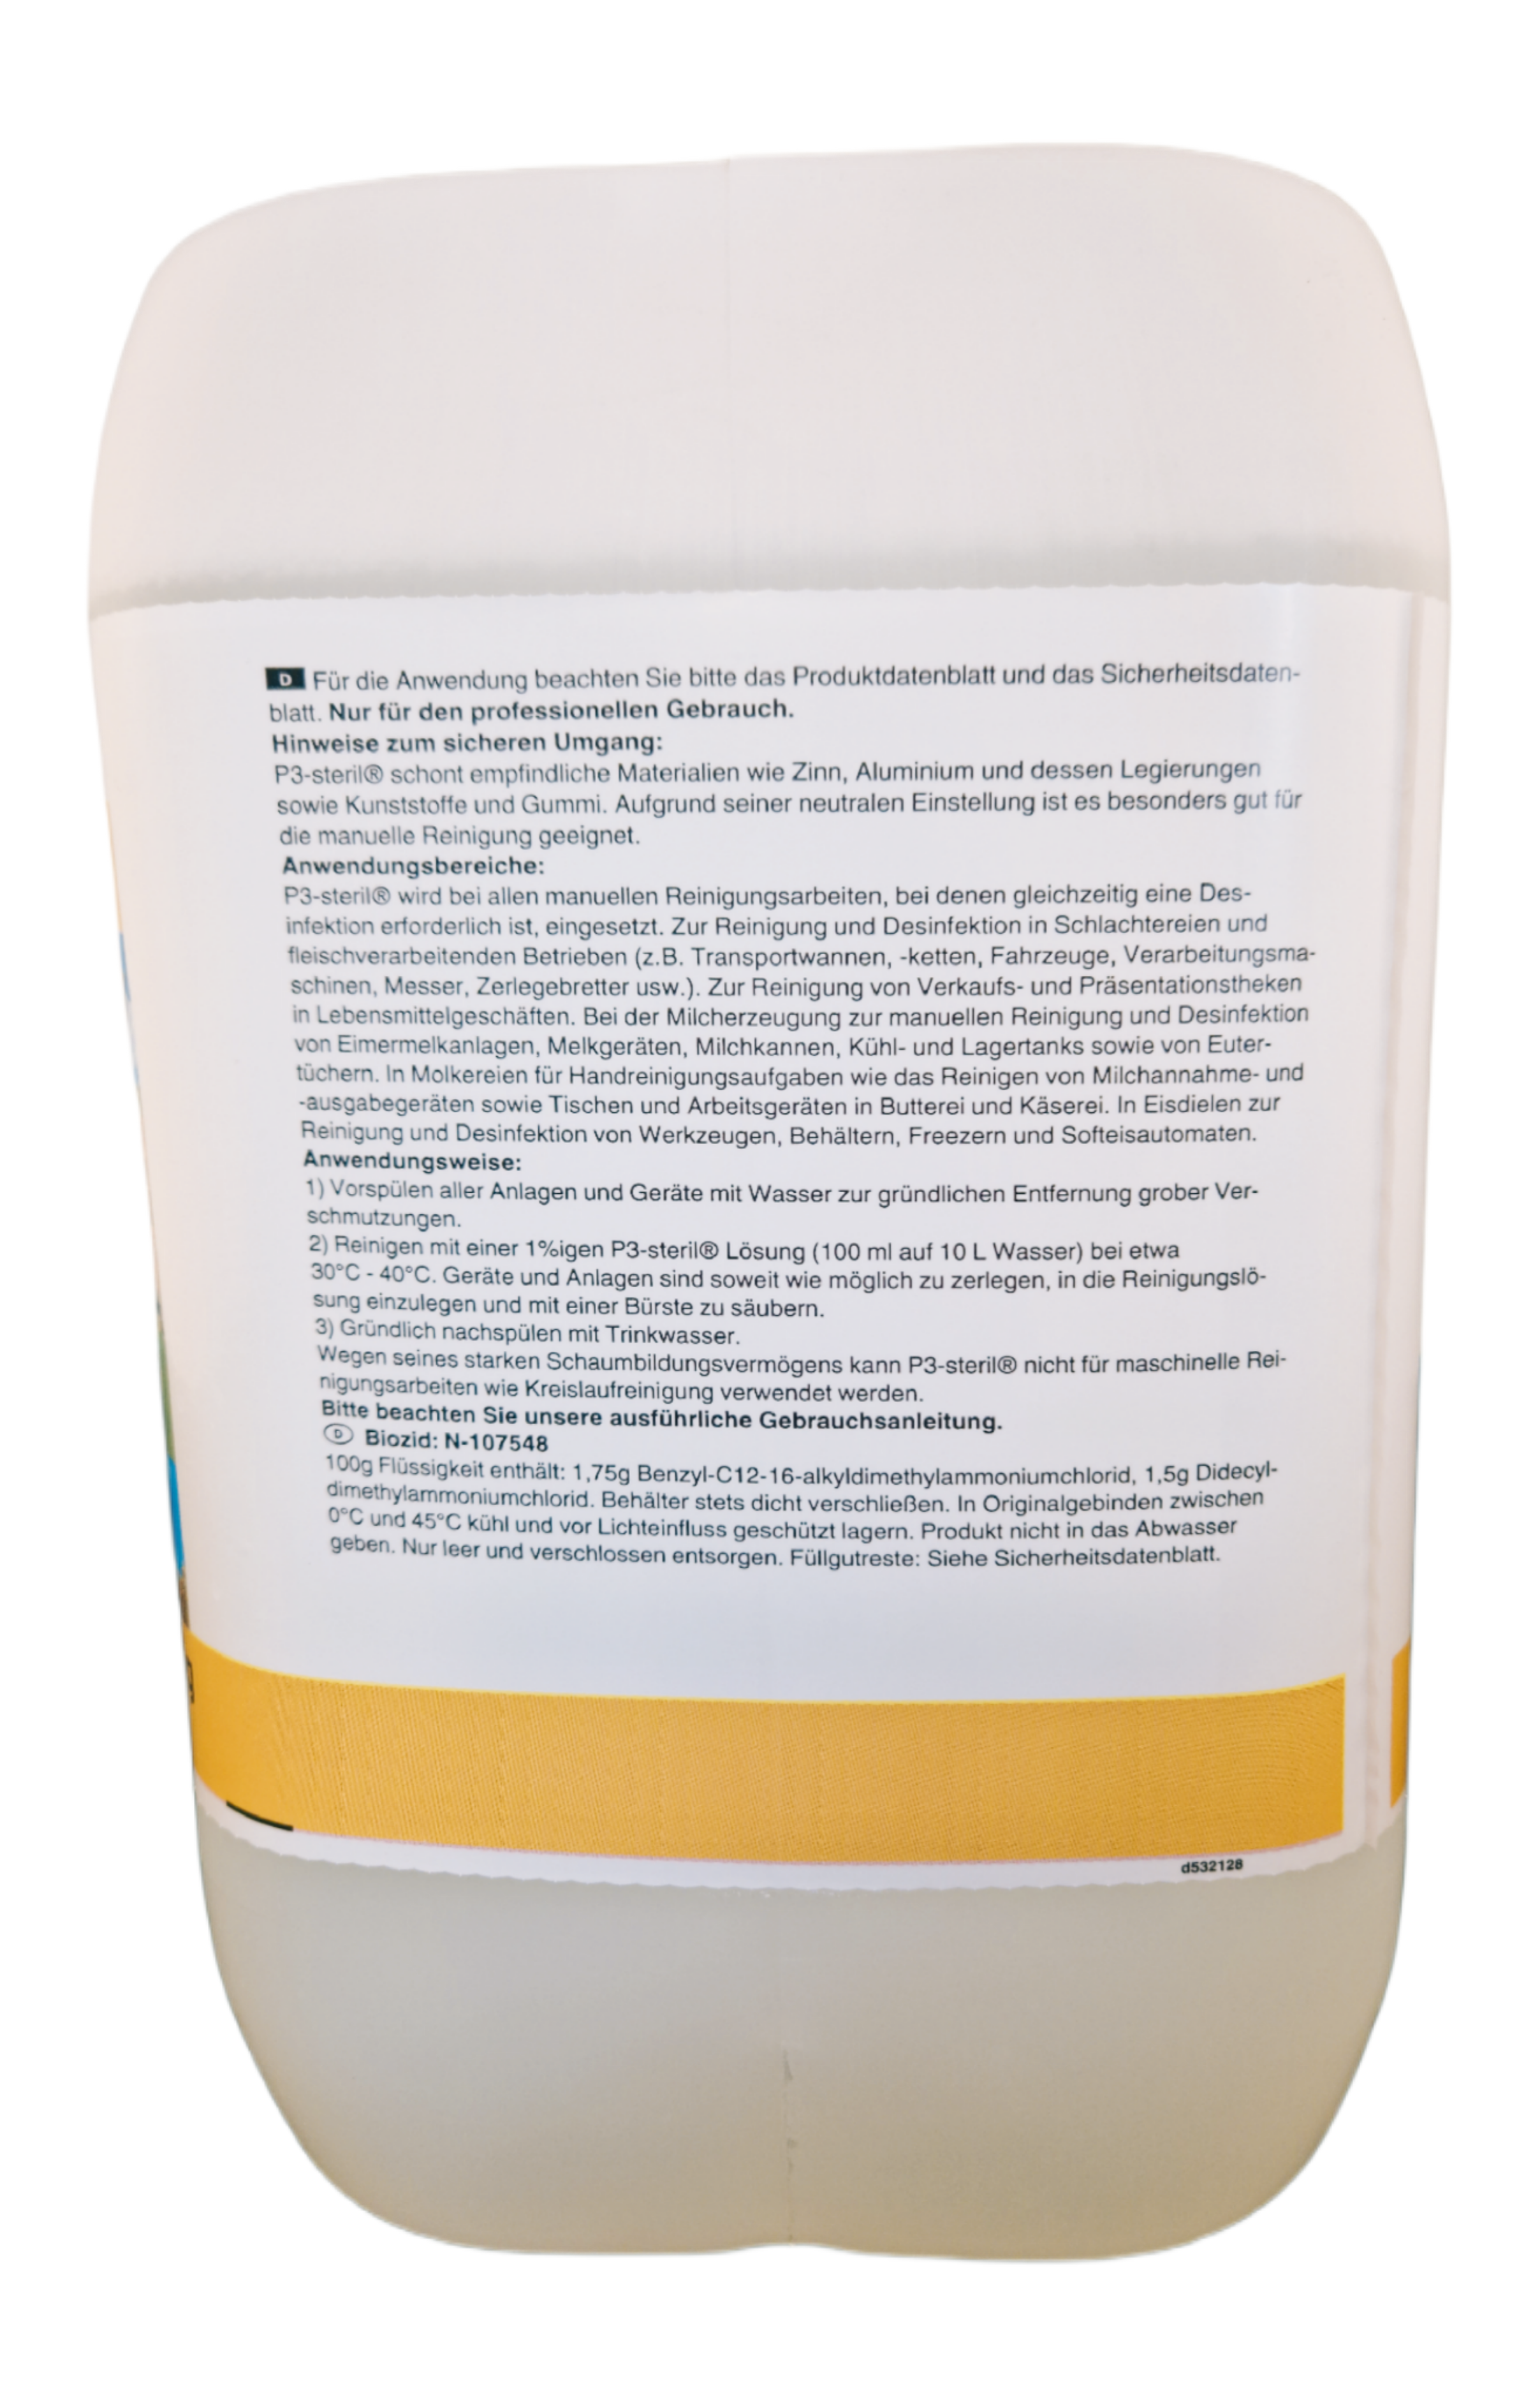 Ecolab - P3-steril Desinfektionsreiniger 11 Kg